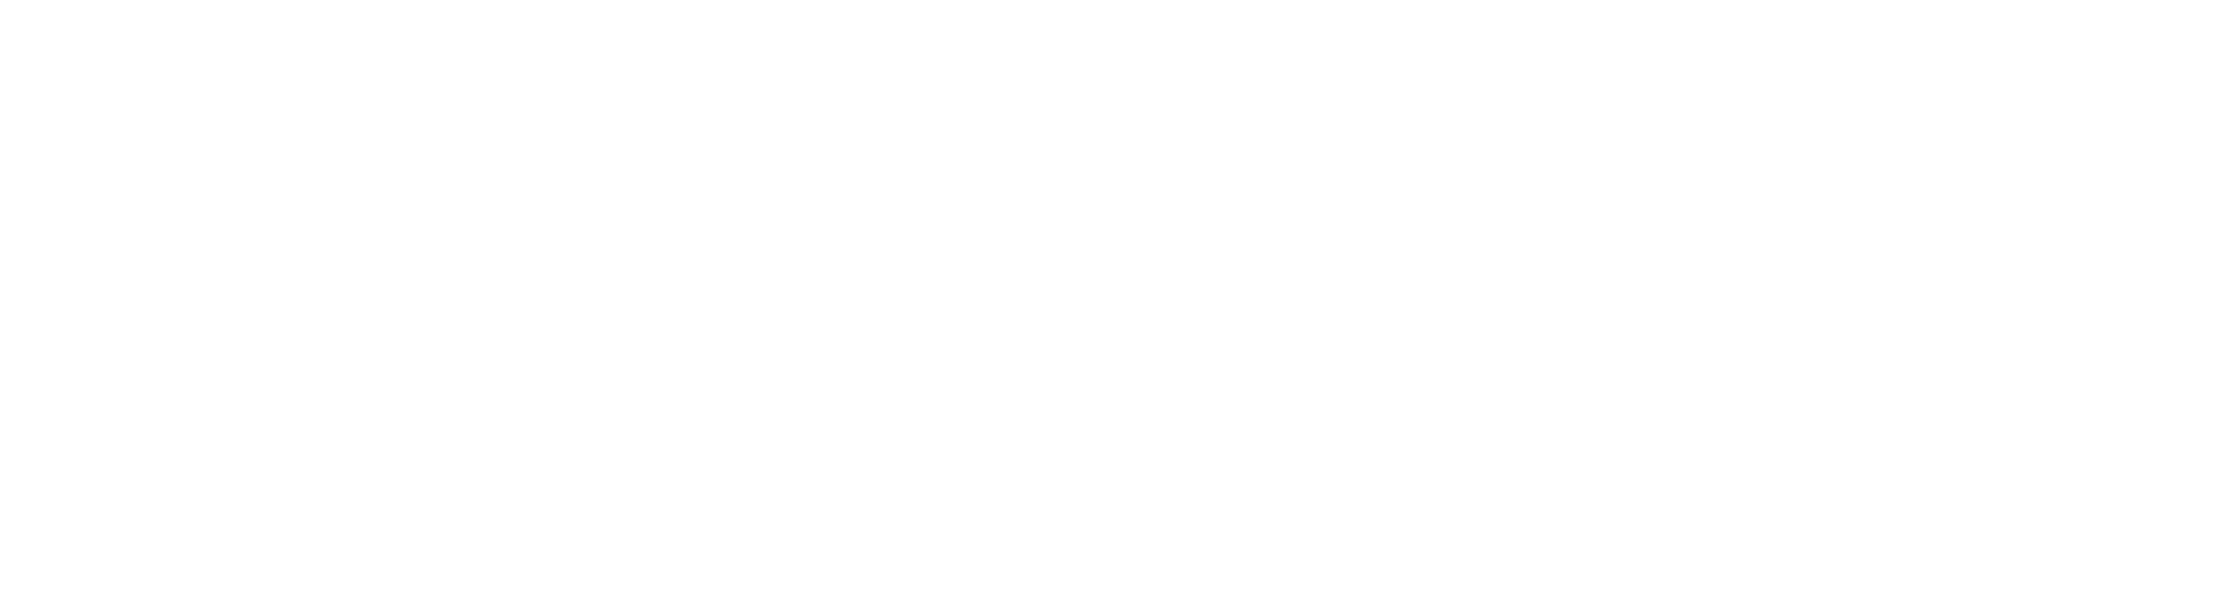 NCEAS-full logo-WHT